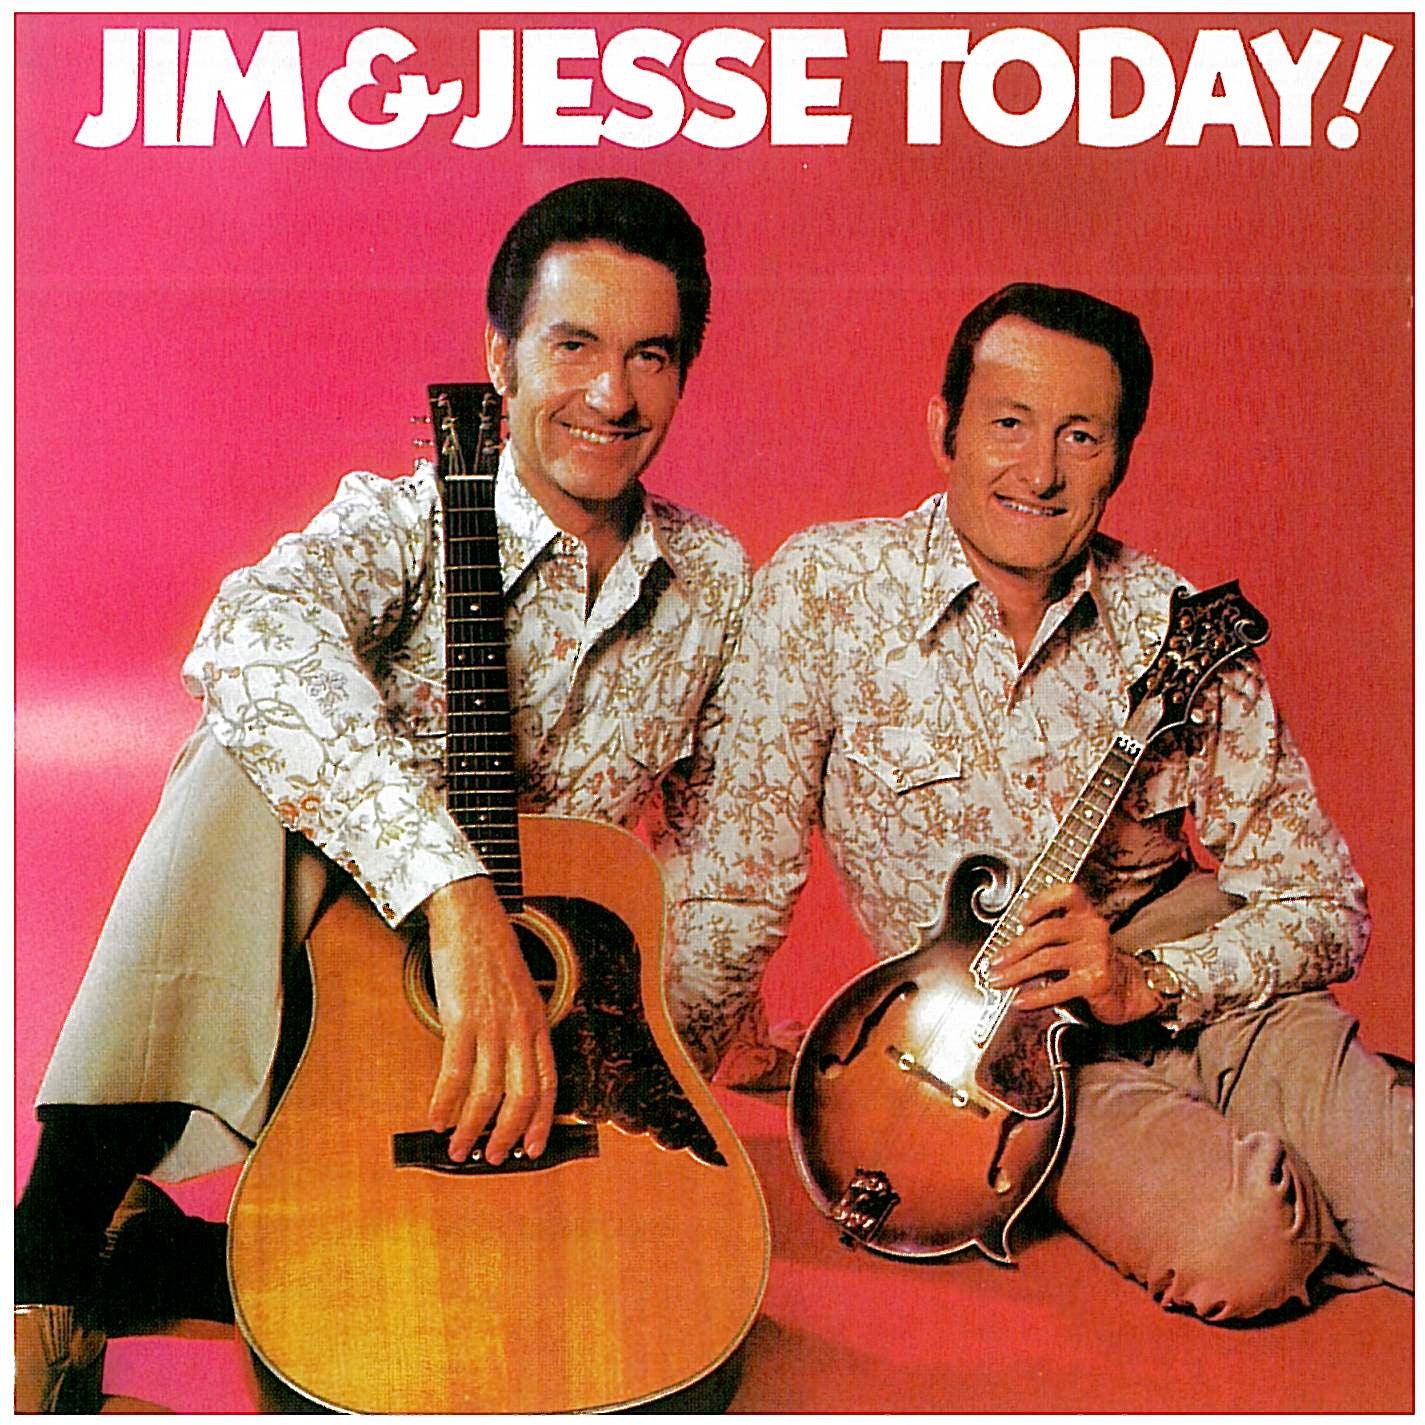 Jim & Jesse: Today!